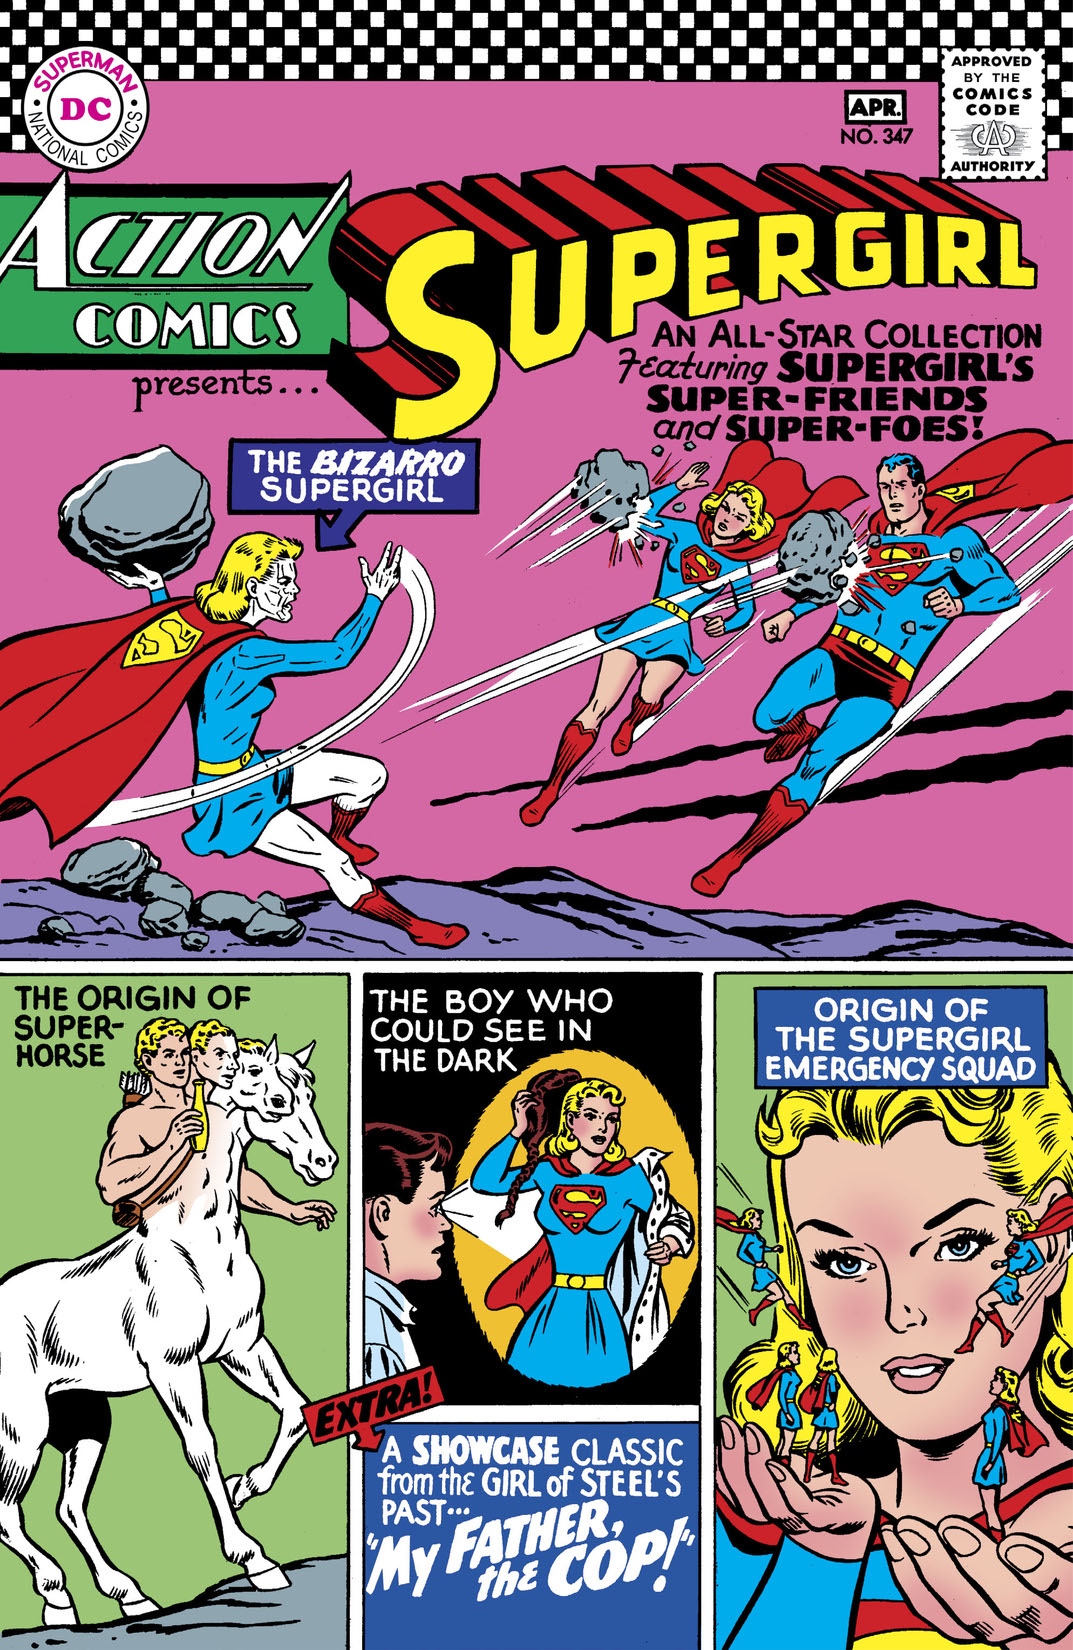 Action Comics (1938-) #347 preview images